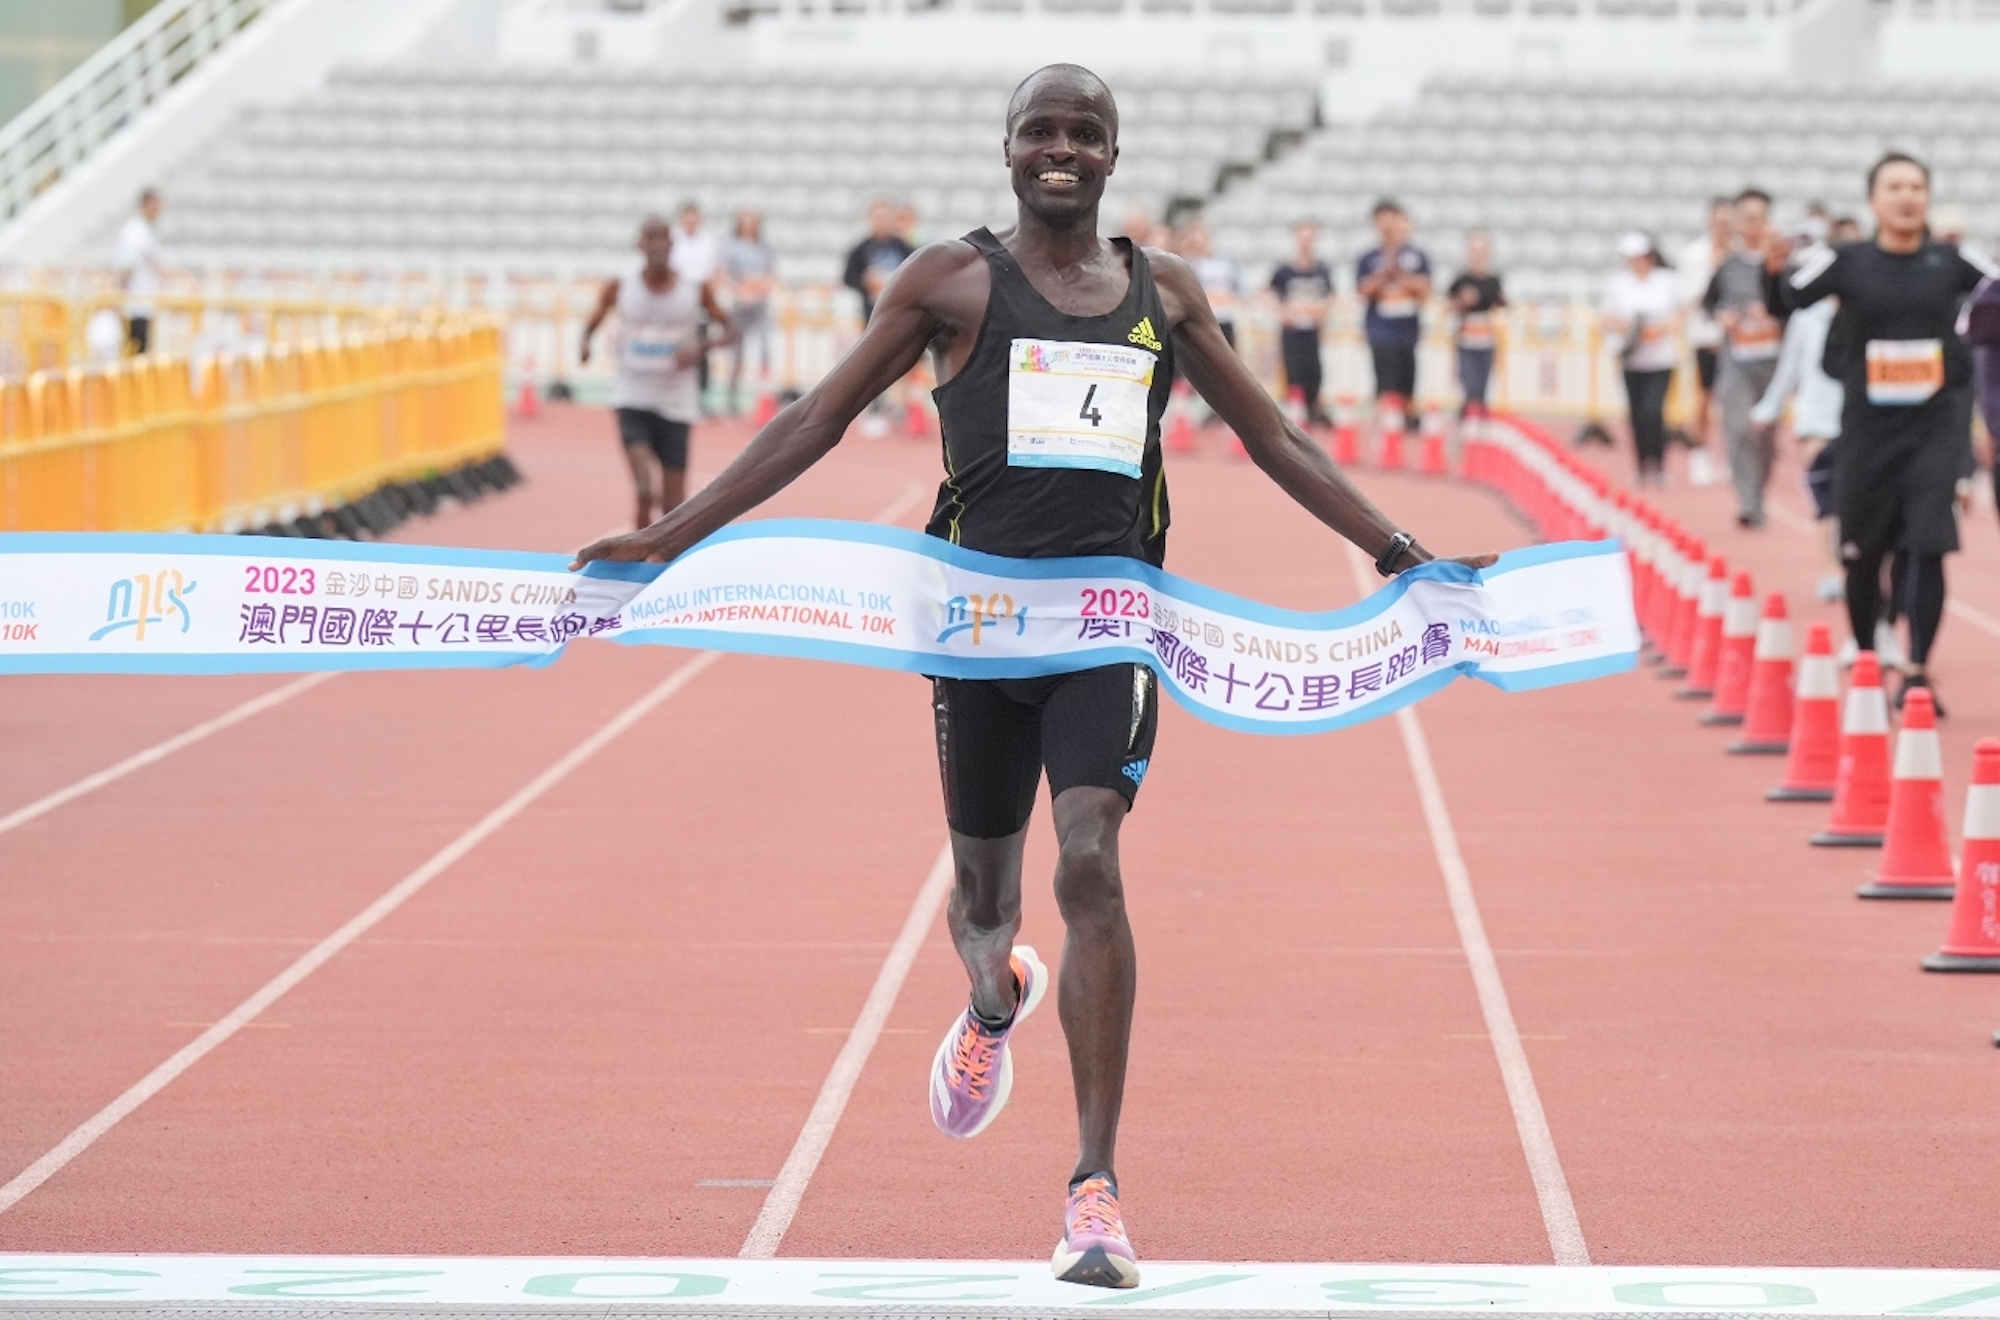 Kenyan athletes bag top honours at the Sands China Macao International 10K Race